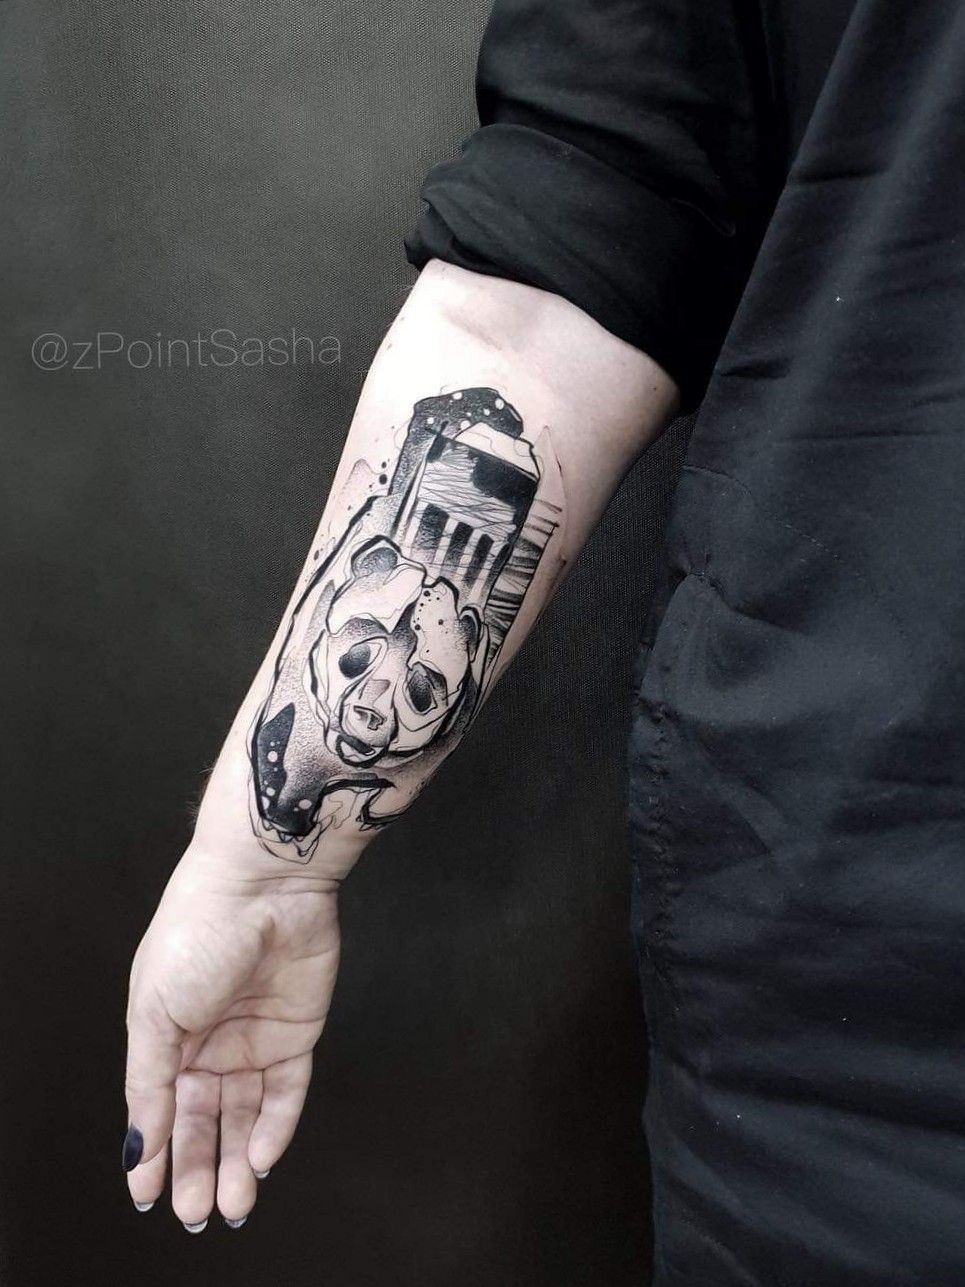 Newcastle United news Jonas Gutierrez celebrates beating testicular cancer  by getting awesome tattoo of Eminem lyrics  Football  Metro News